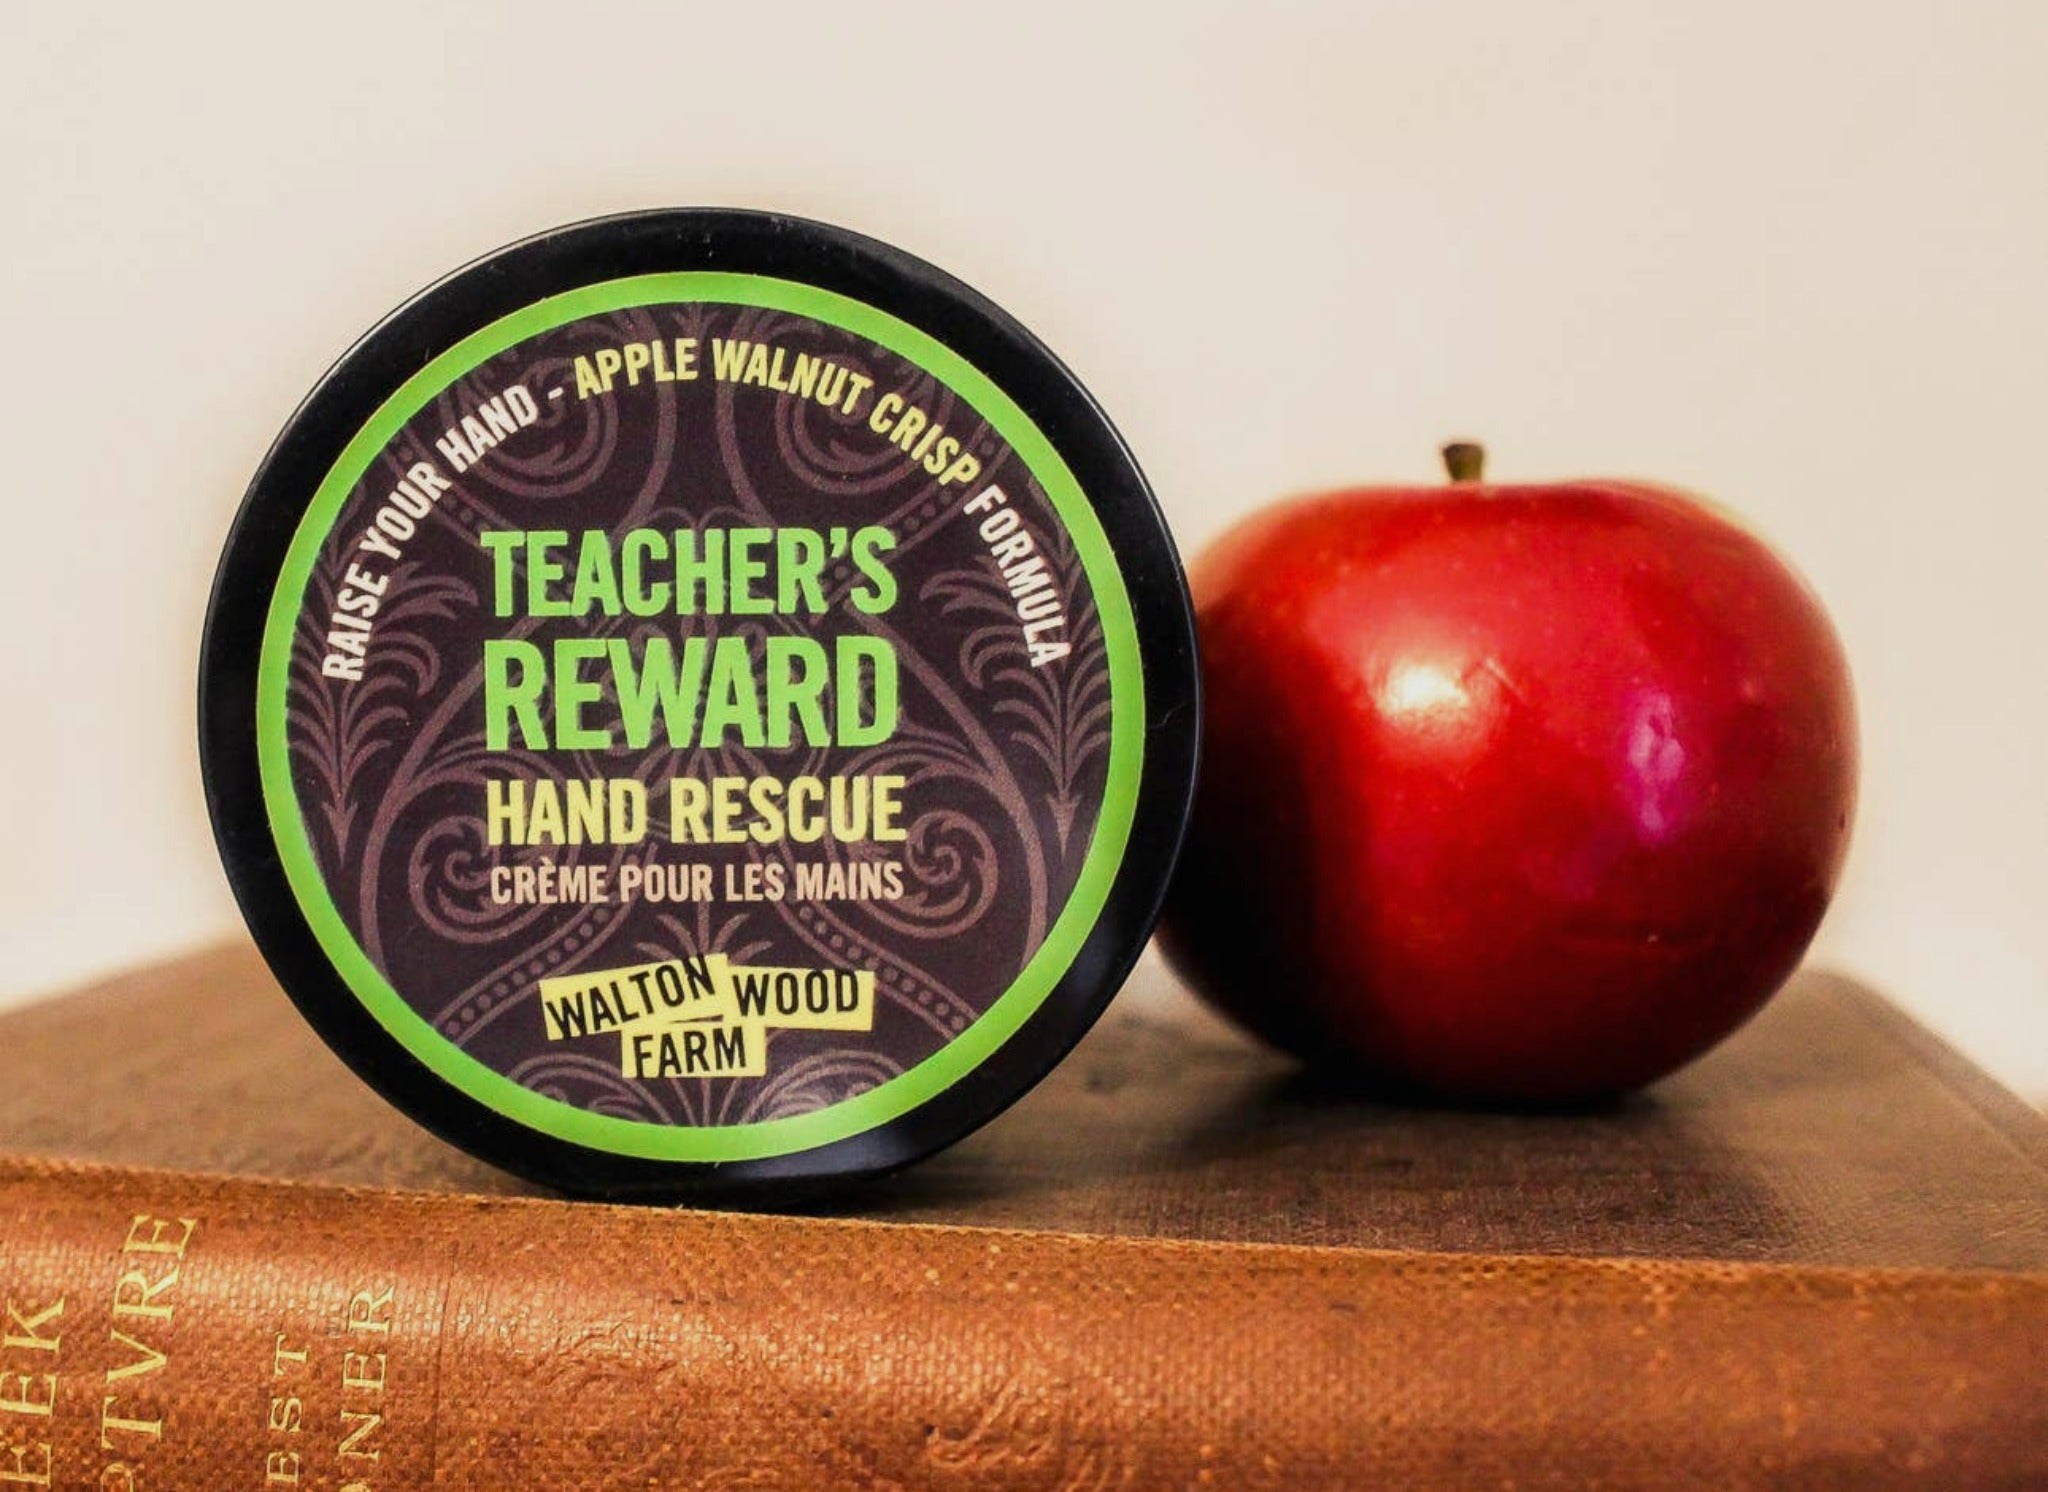 Walton Wood Farm Teacher's Reward Apple Crisp hand rescue